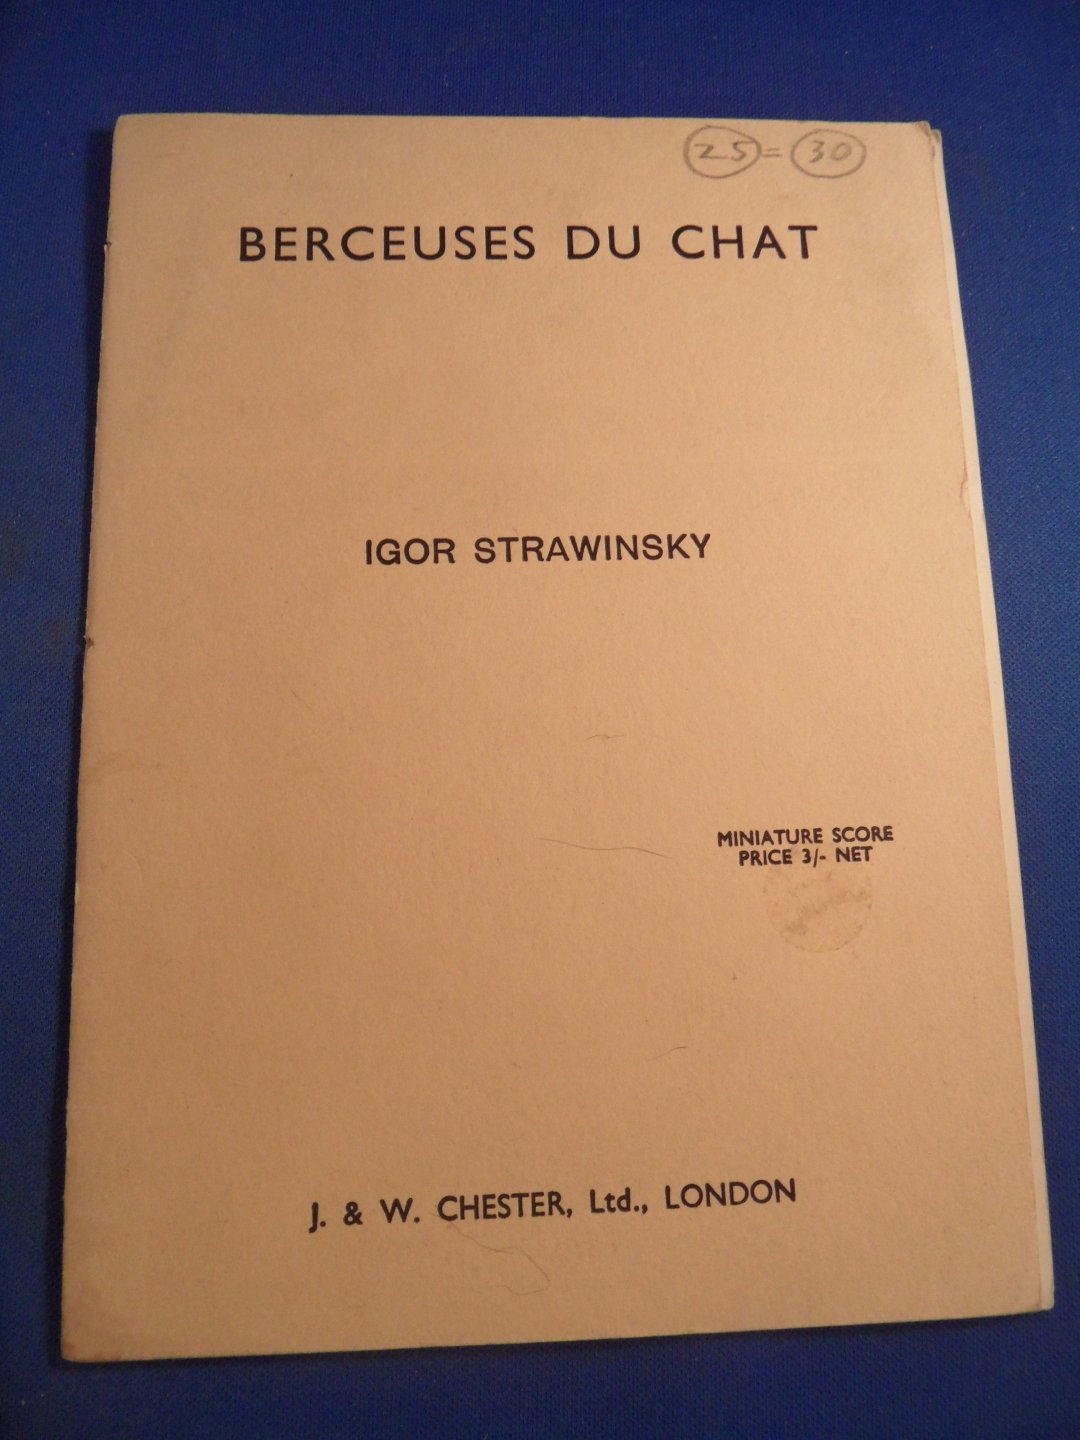 Strawinsky, Igor - Berceuses du chat, miniature score